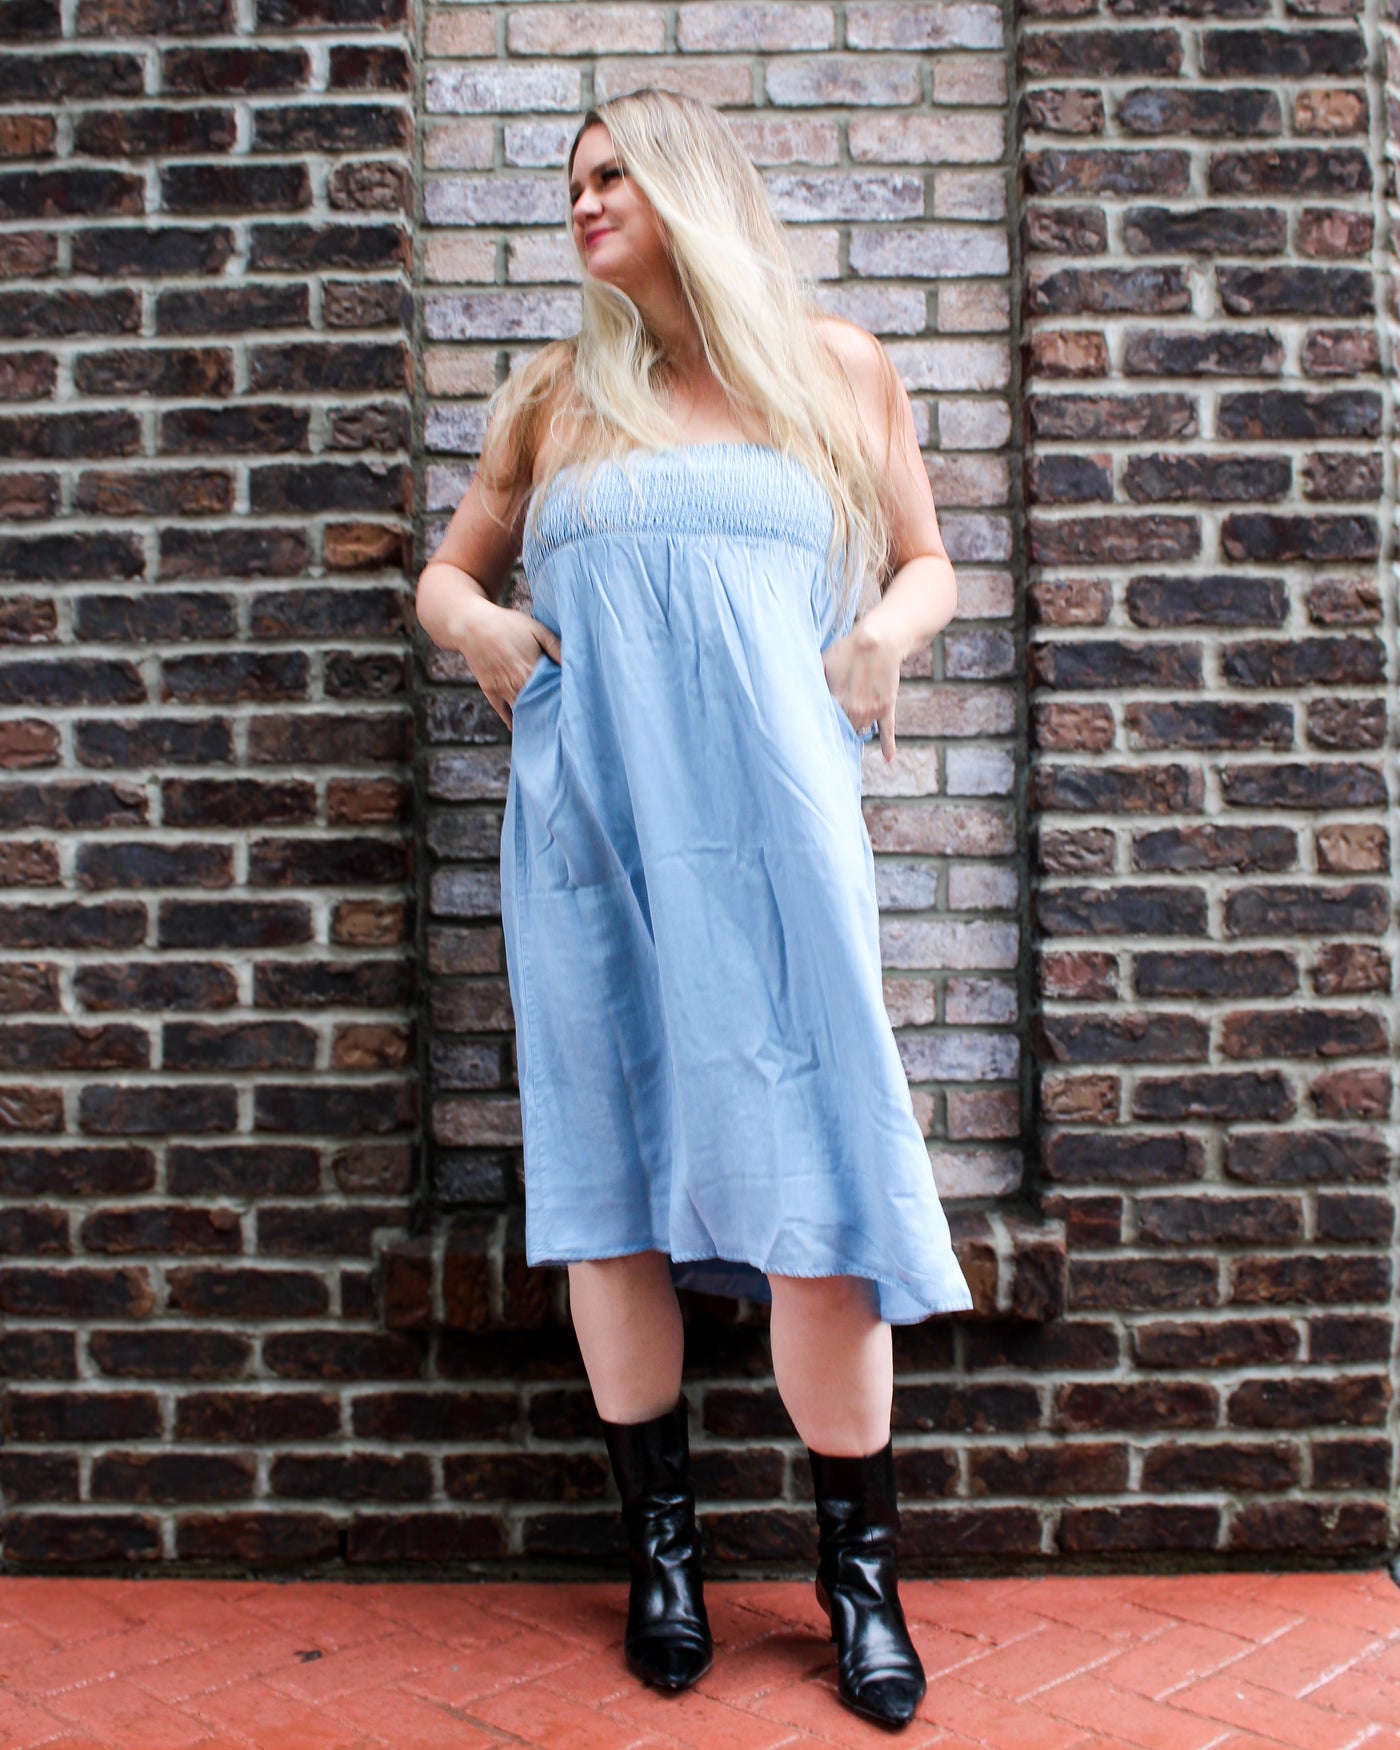 Suzanne Smocked Dress / Skirt